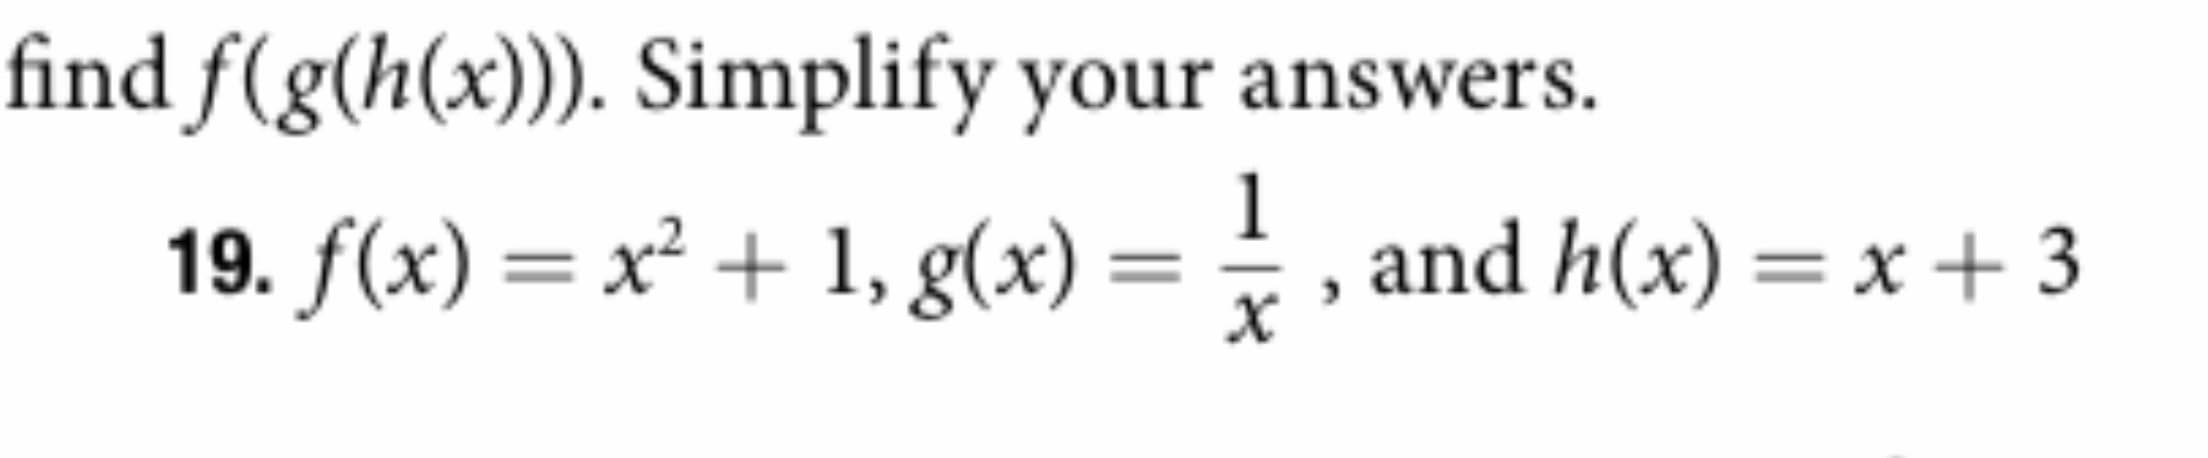 |find f(g(h(x)). Simplify your answers.
1
19. f(x) x1, g(x)
and h(x) = x+3
X
